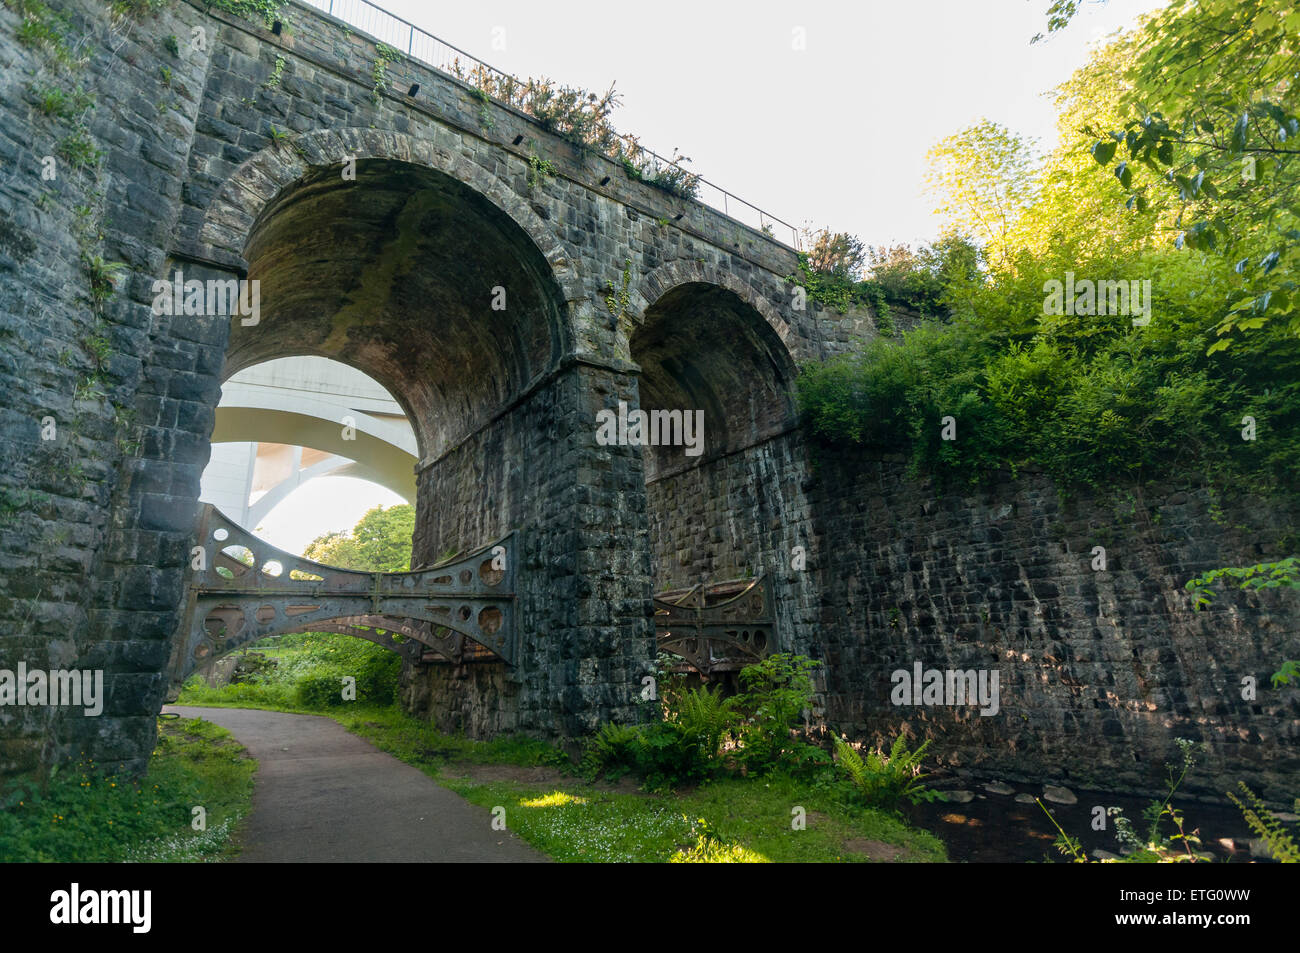 Victorian railway stone viaduct with iron braces Stock Photo